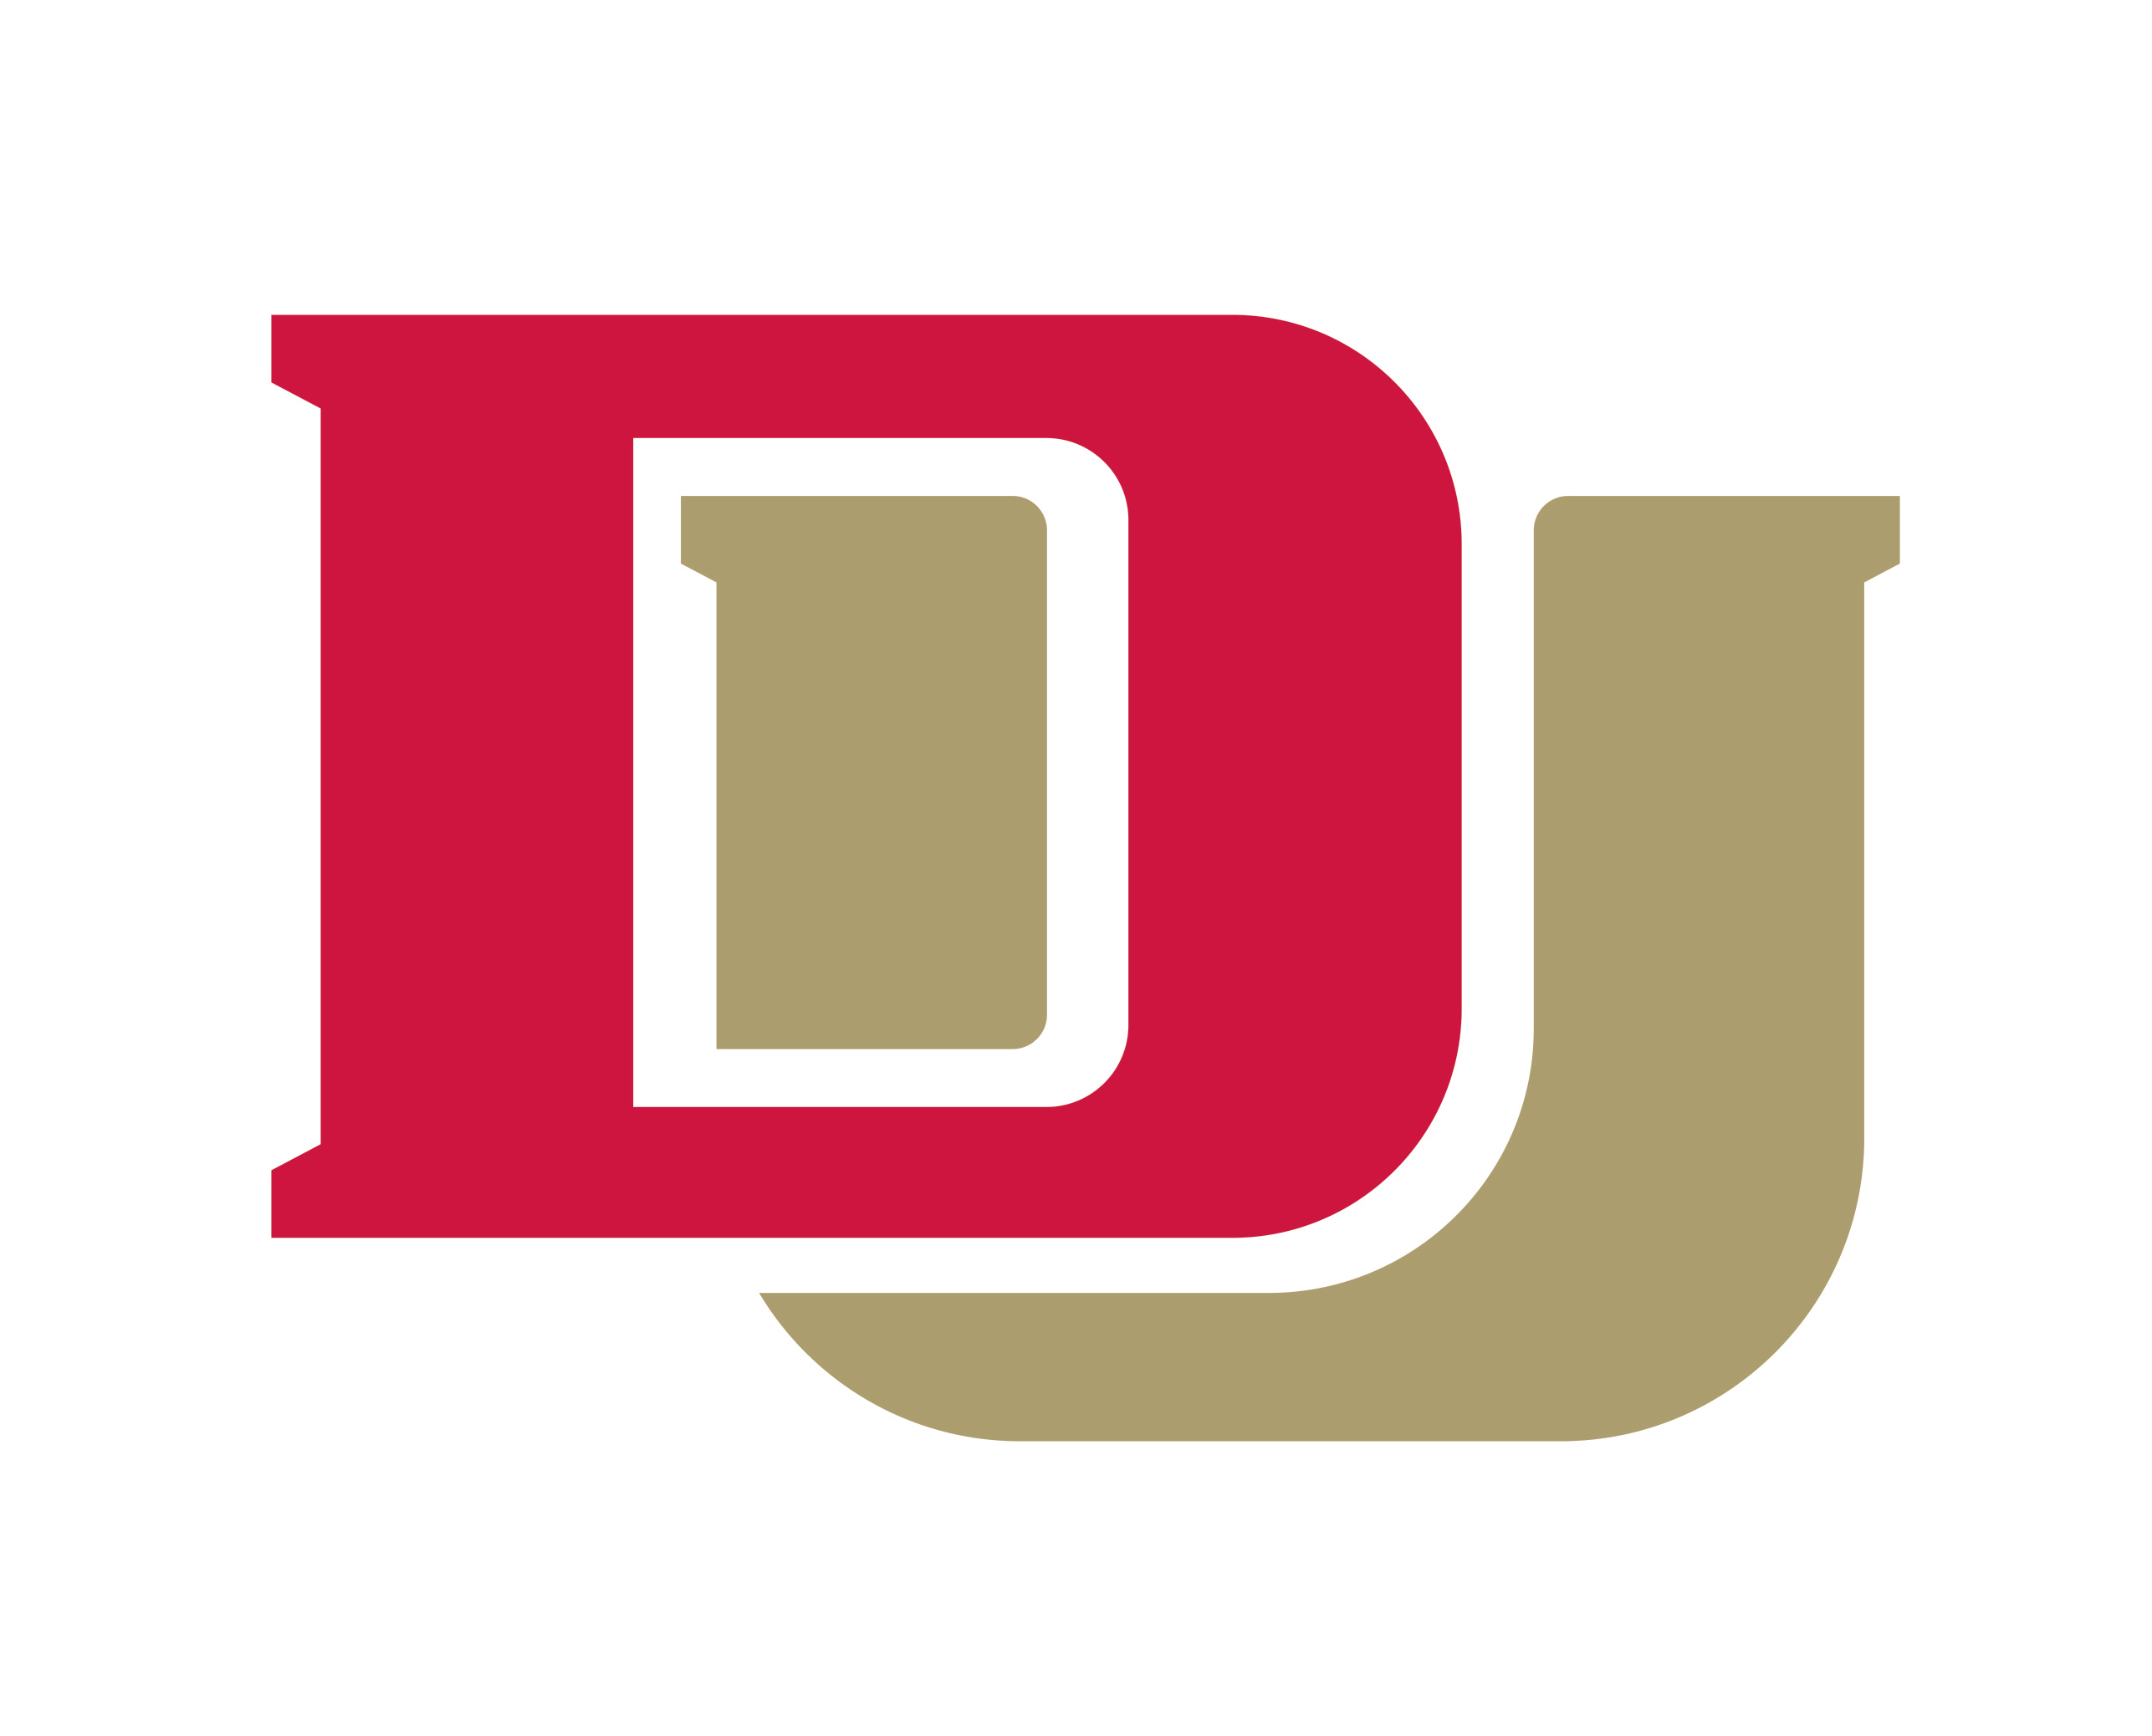 University of Denver interlocking D and U logo